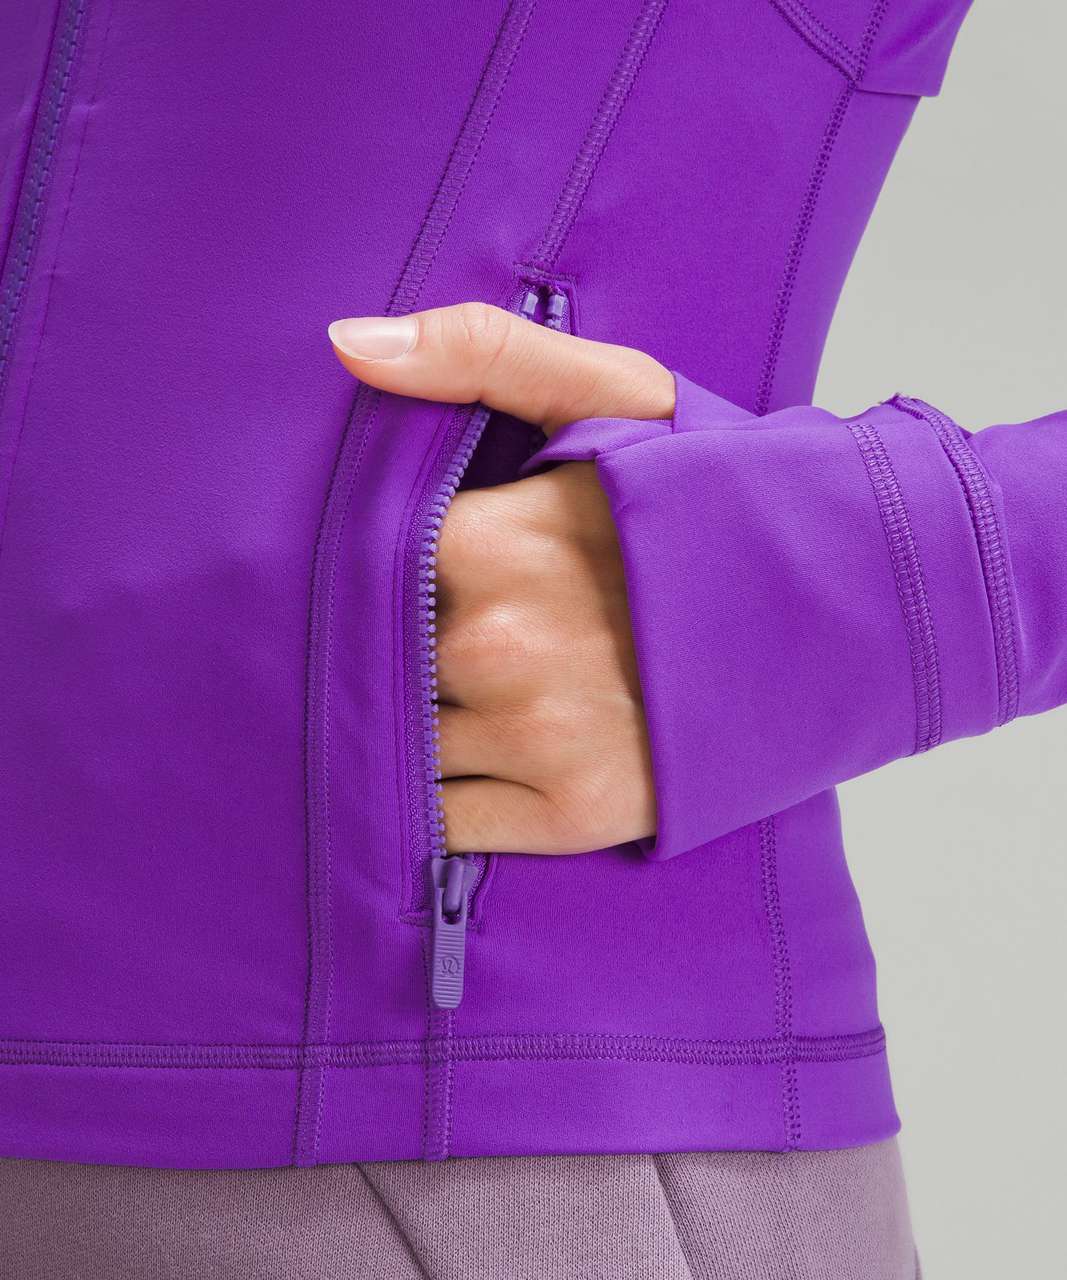 NWT Lululemon Insulated Jacquard Full Zip Jacket XL Atomic Purple